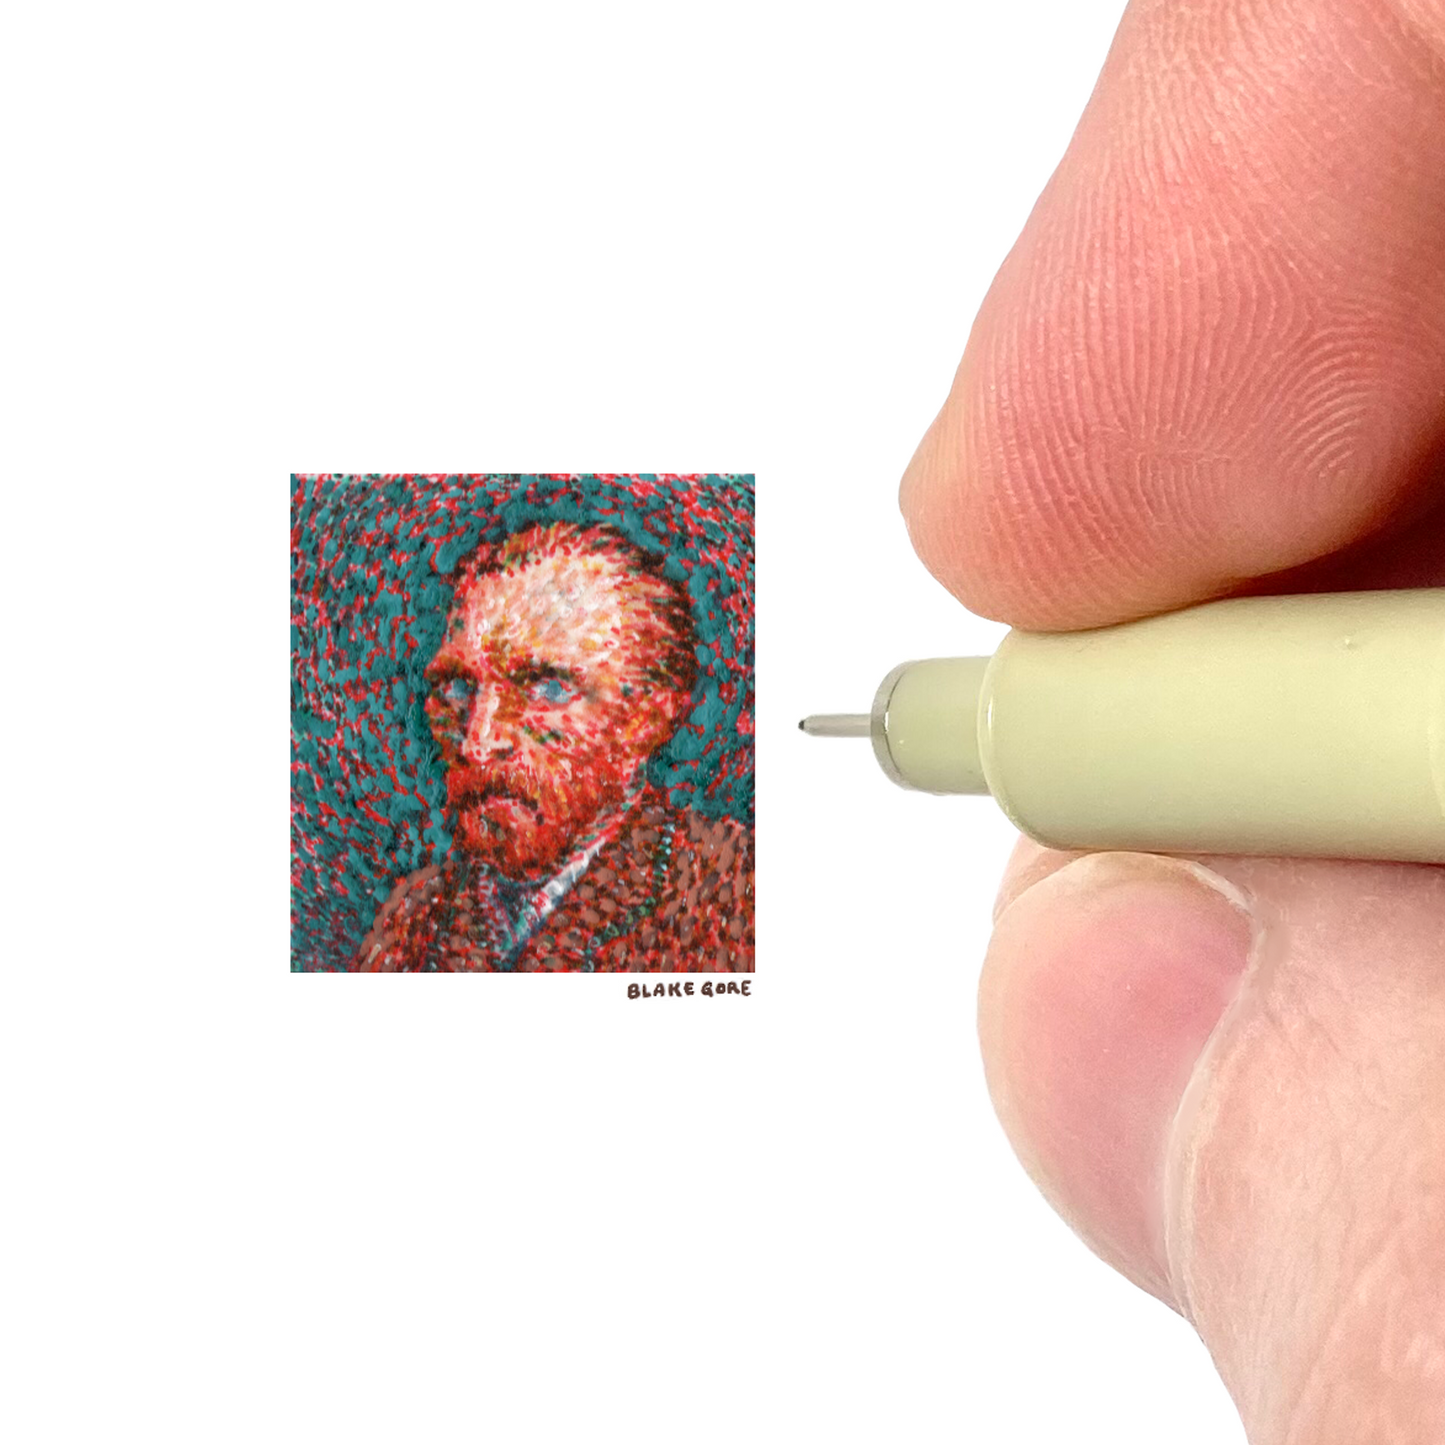 Study of Van Gogh's "Self Portrait"